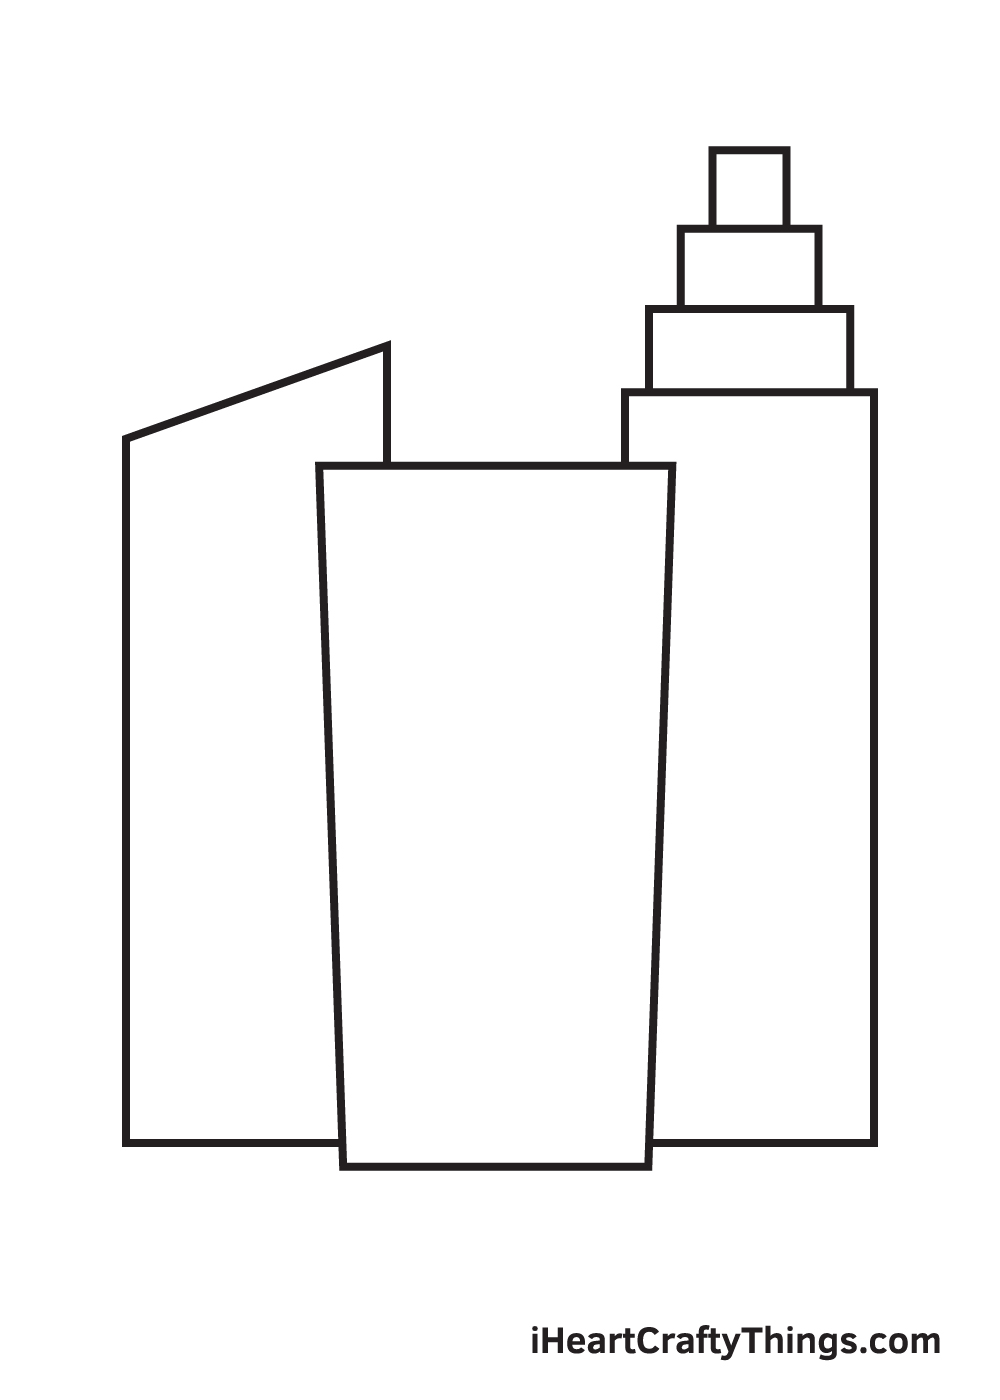 School Sketch Building Vector Images (over 910)